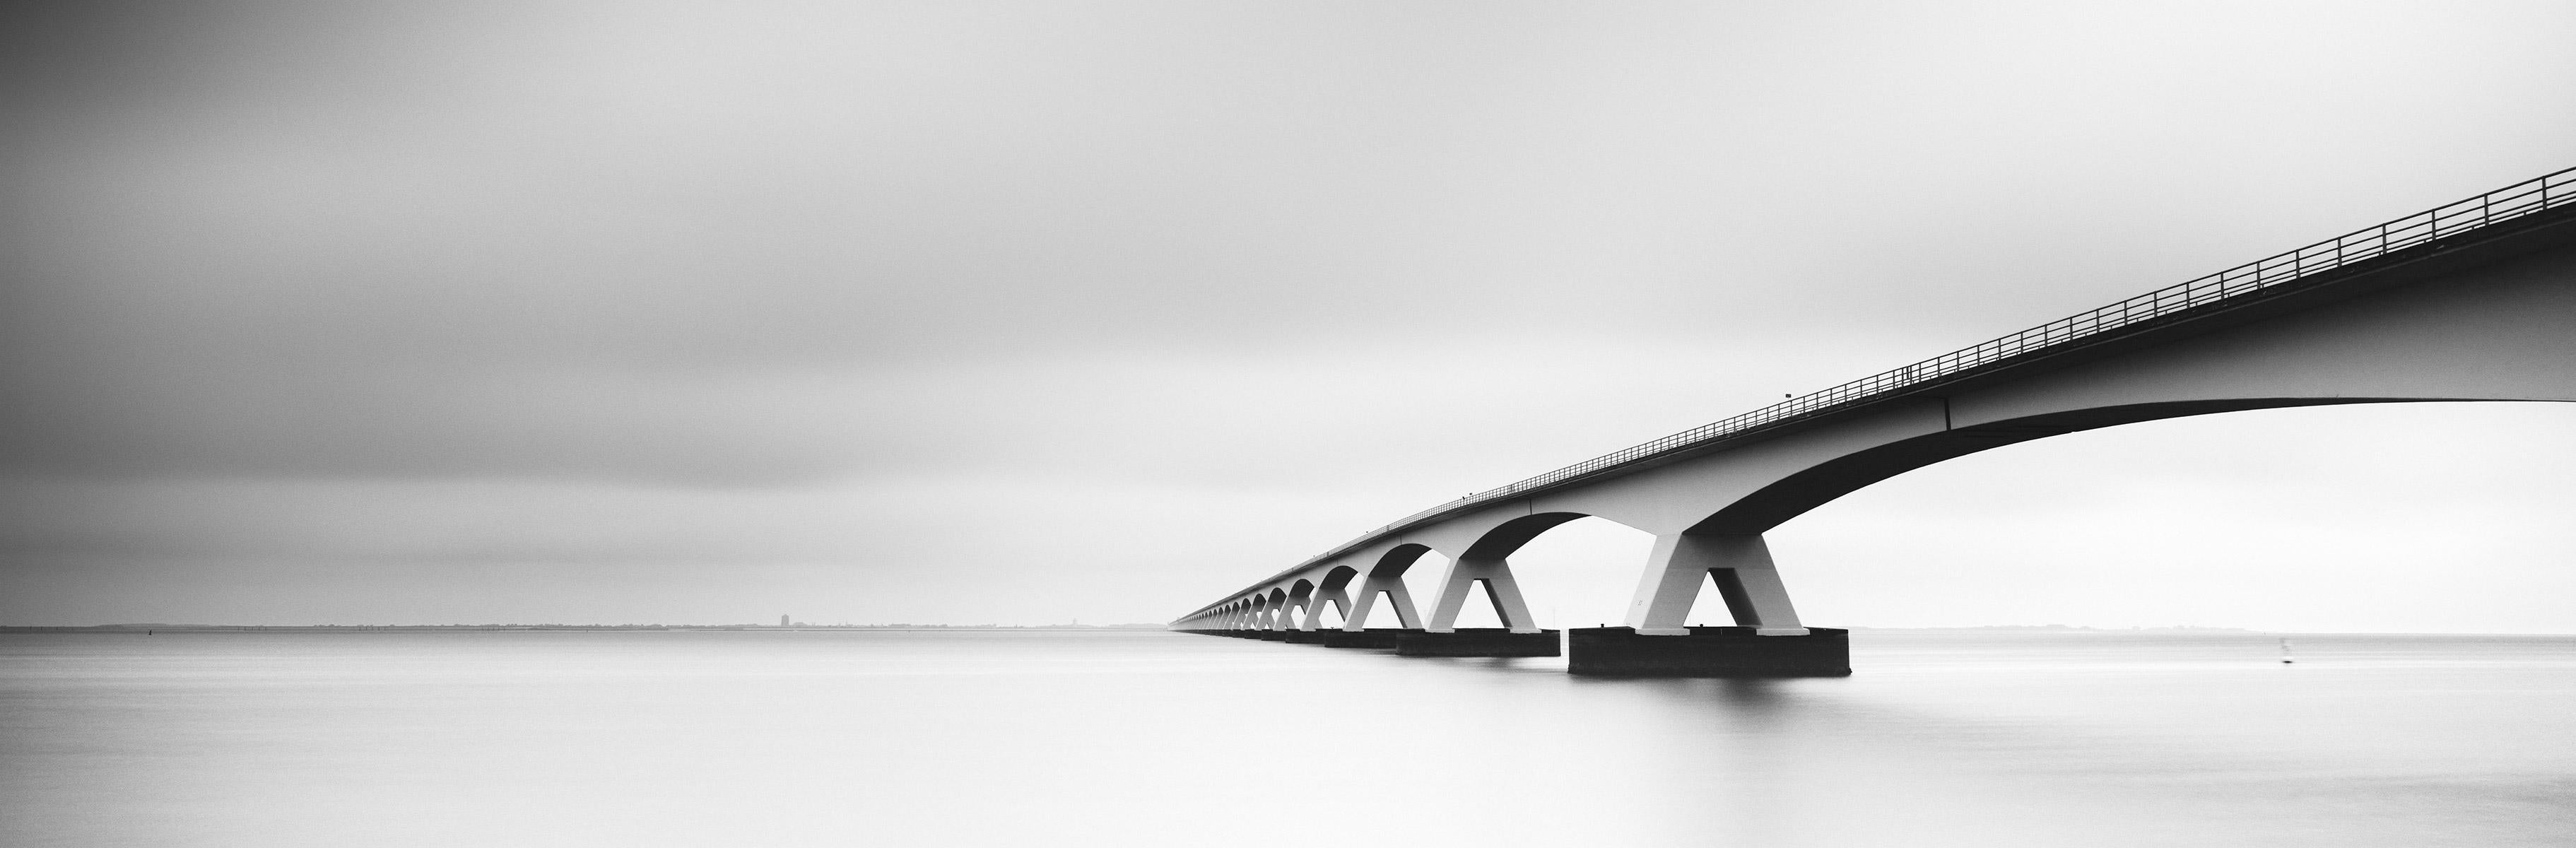 Gerald Berghammer Landscape Photograph - Bridge Panorama, Zeeland, Netherlands, black and white art landscape photography